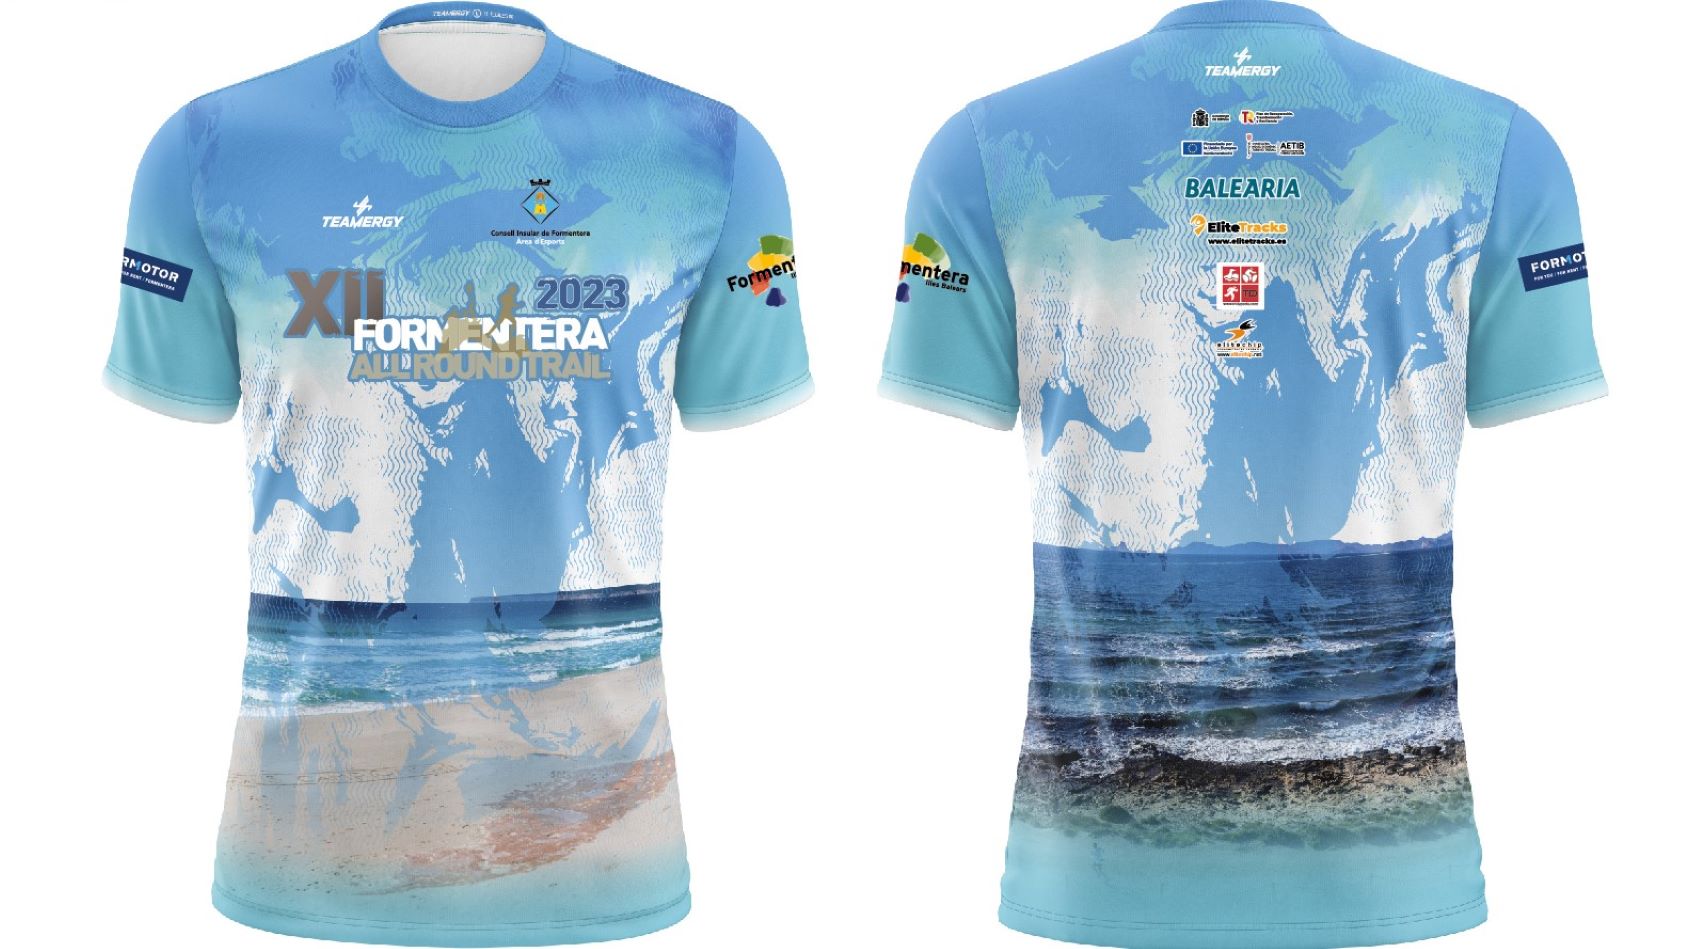 Camiseta oficial mujer Formentera All Round Trail 2023